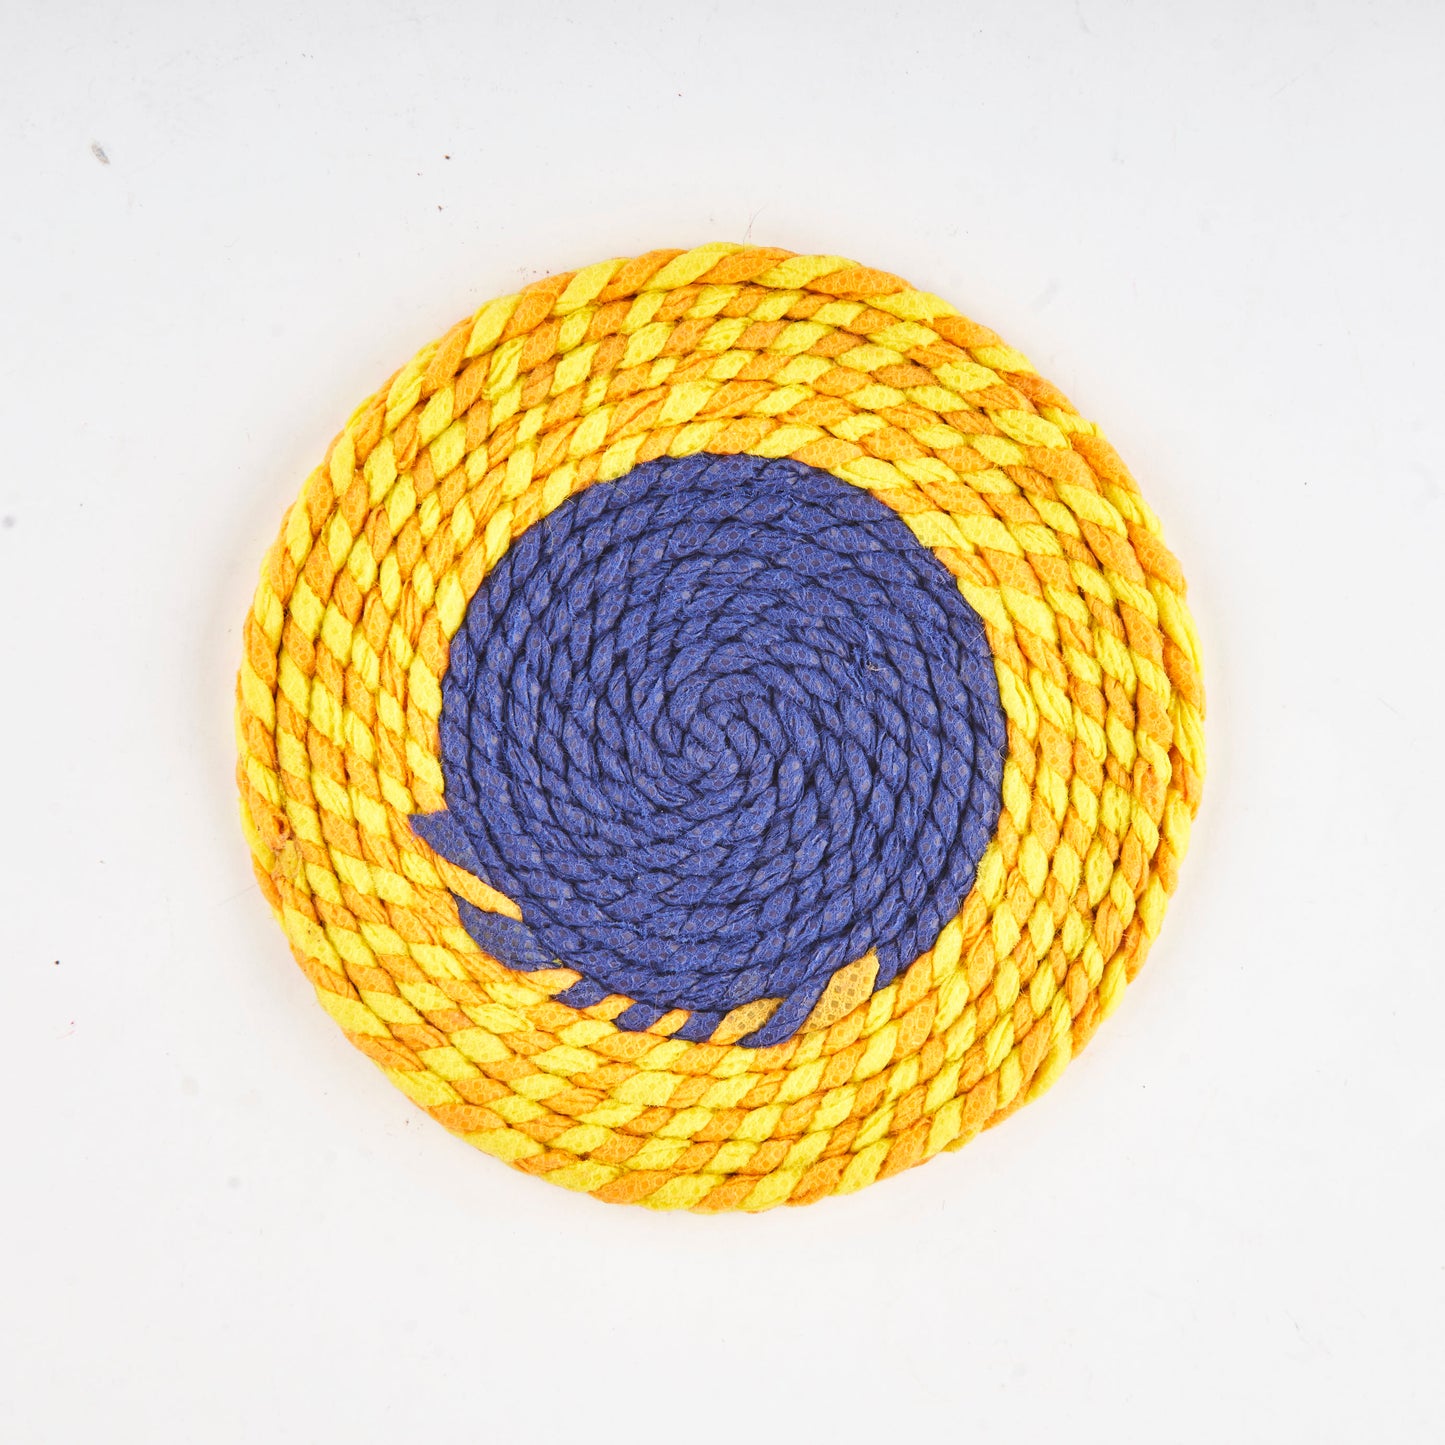 Orange, Yellow & Blue - Non Woven Coaster